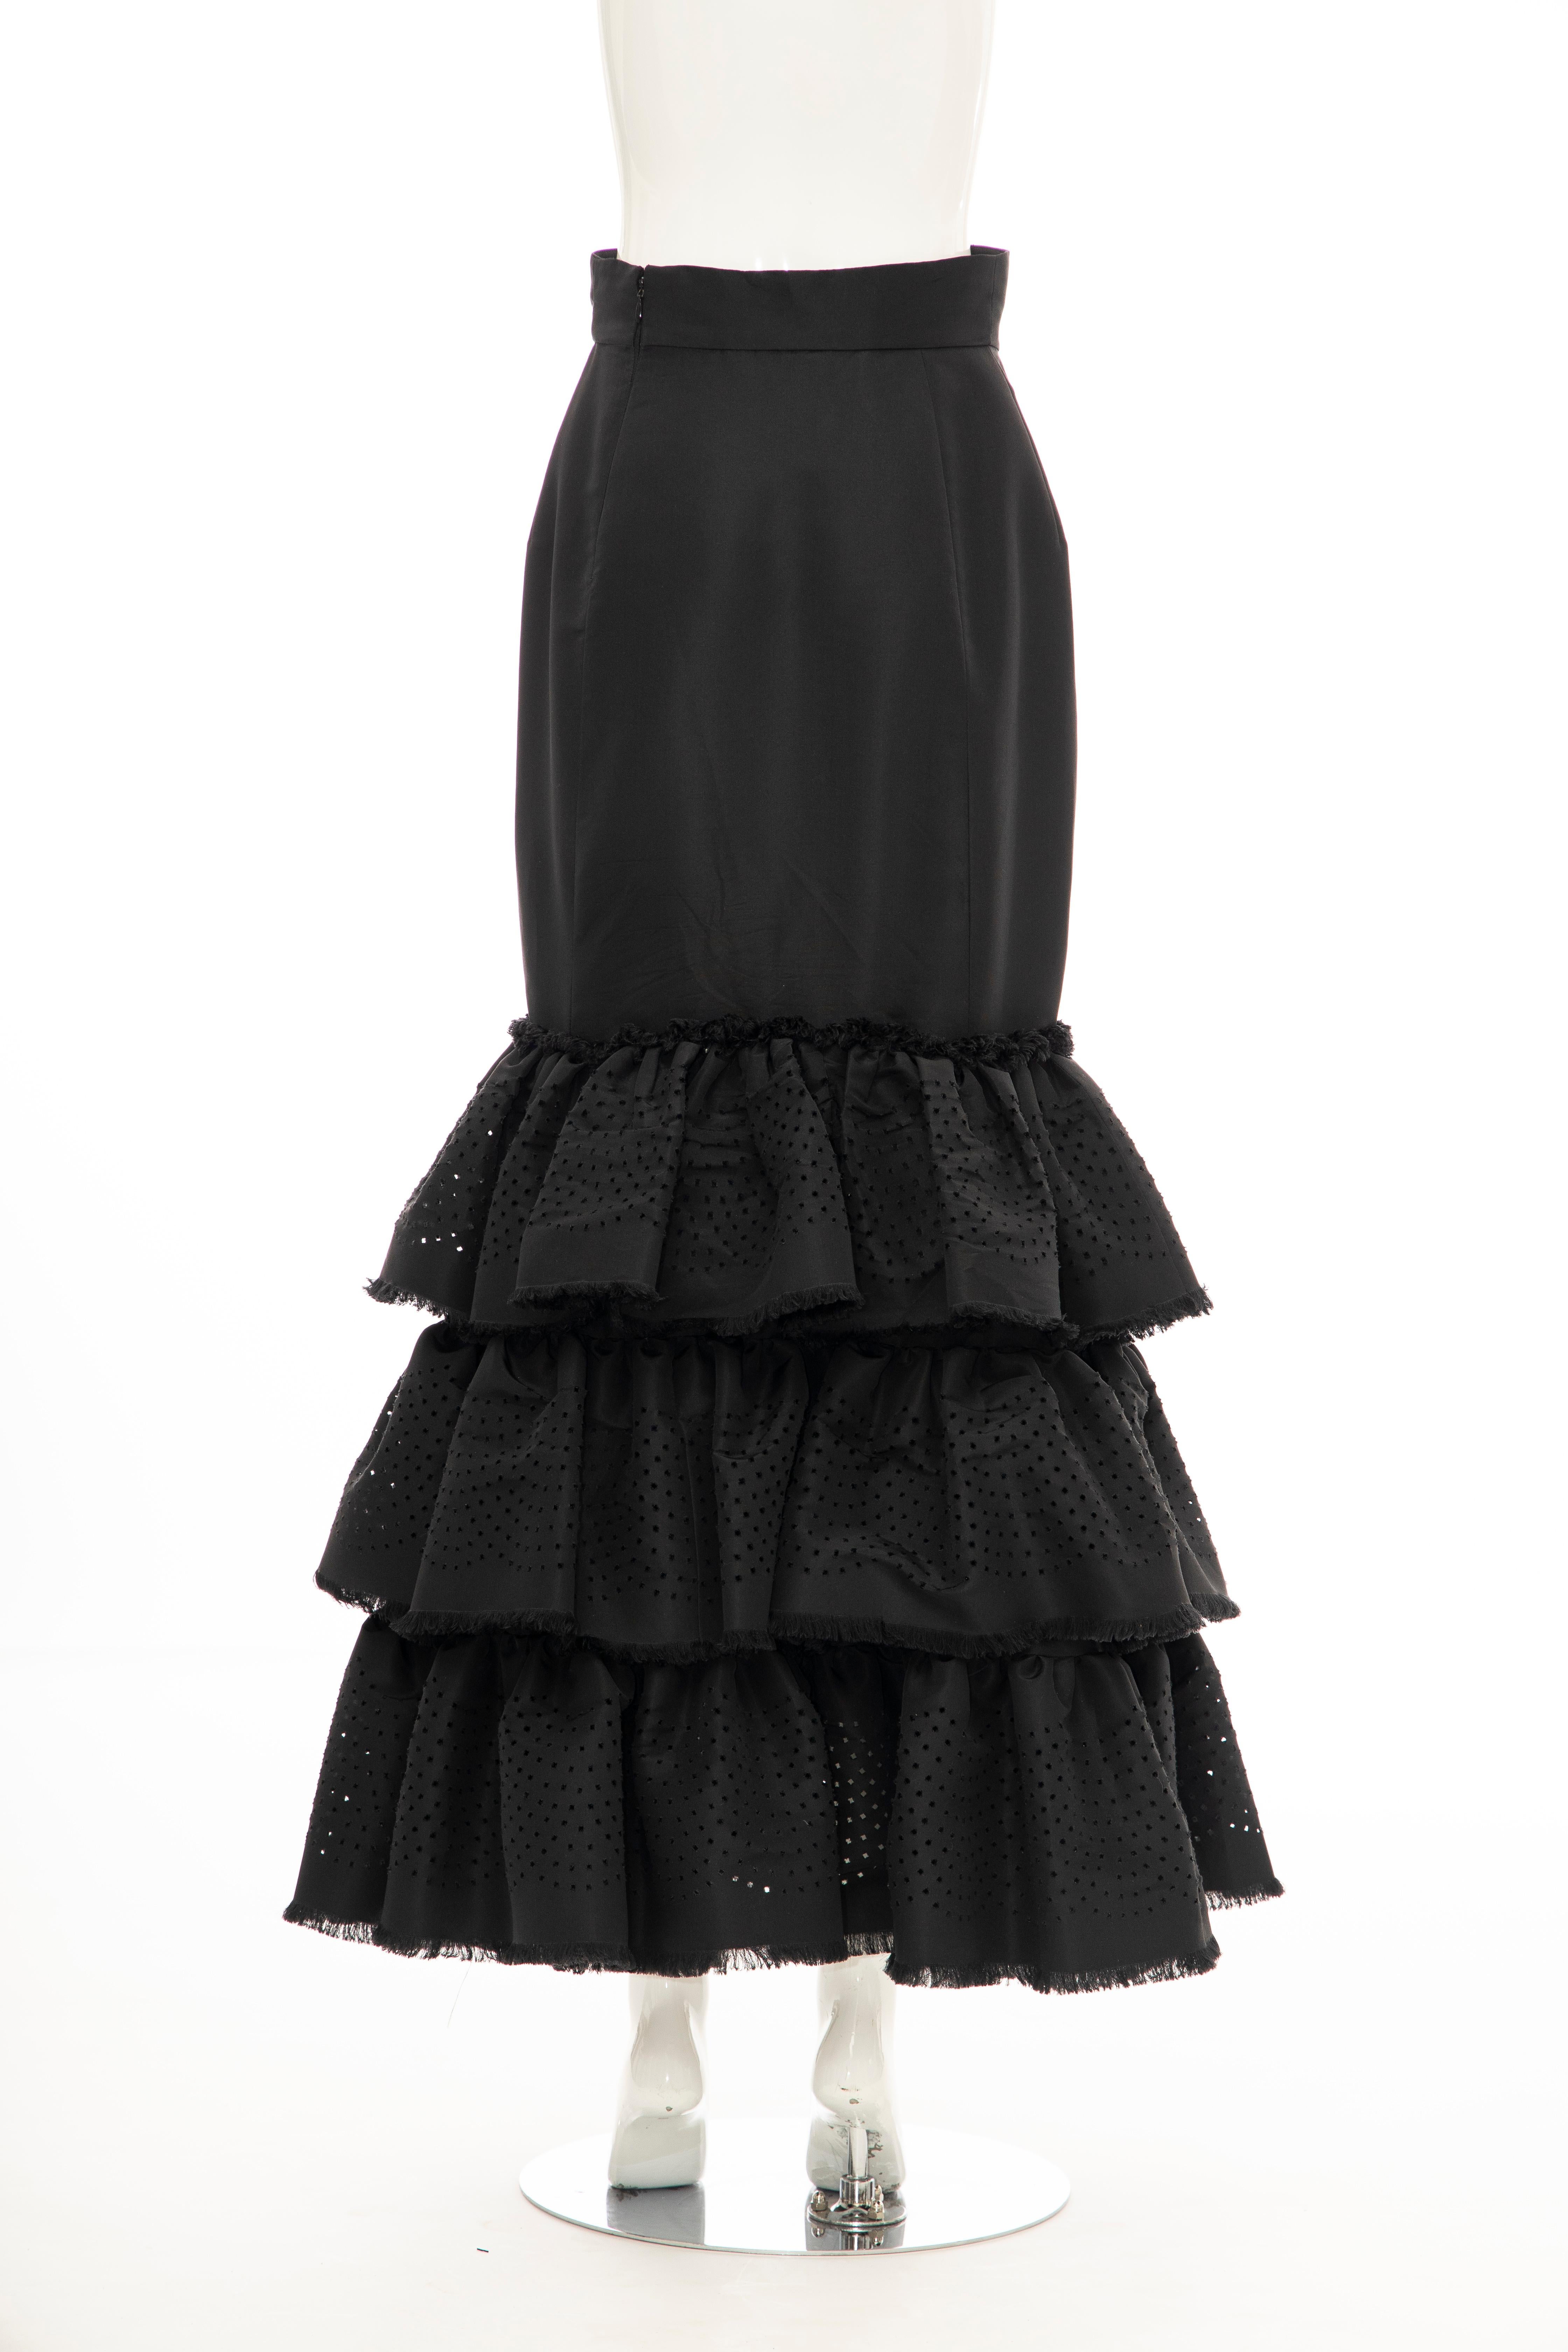 Oscar de la Renta Black Punched Silk Faille Evening Skirt, Fall 2001 For Sale 7